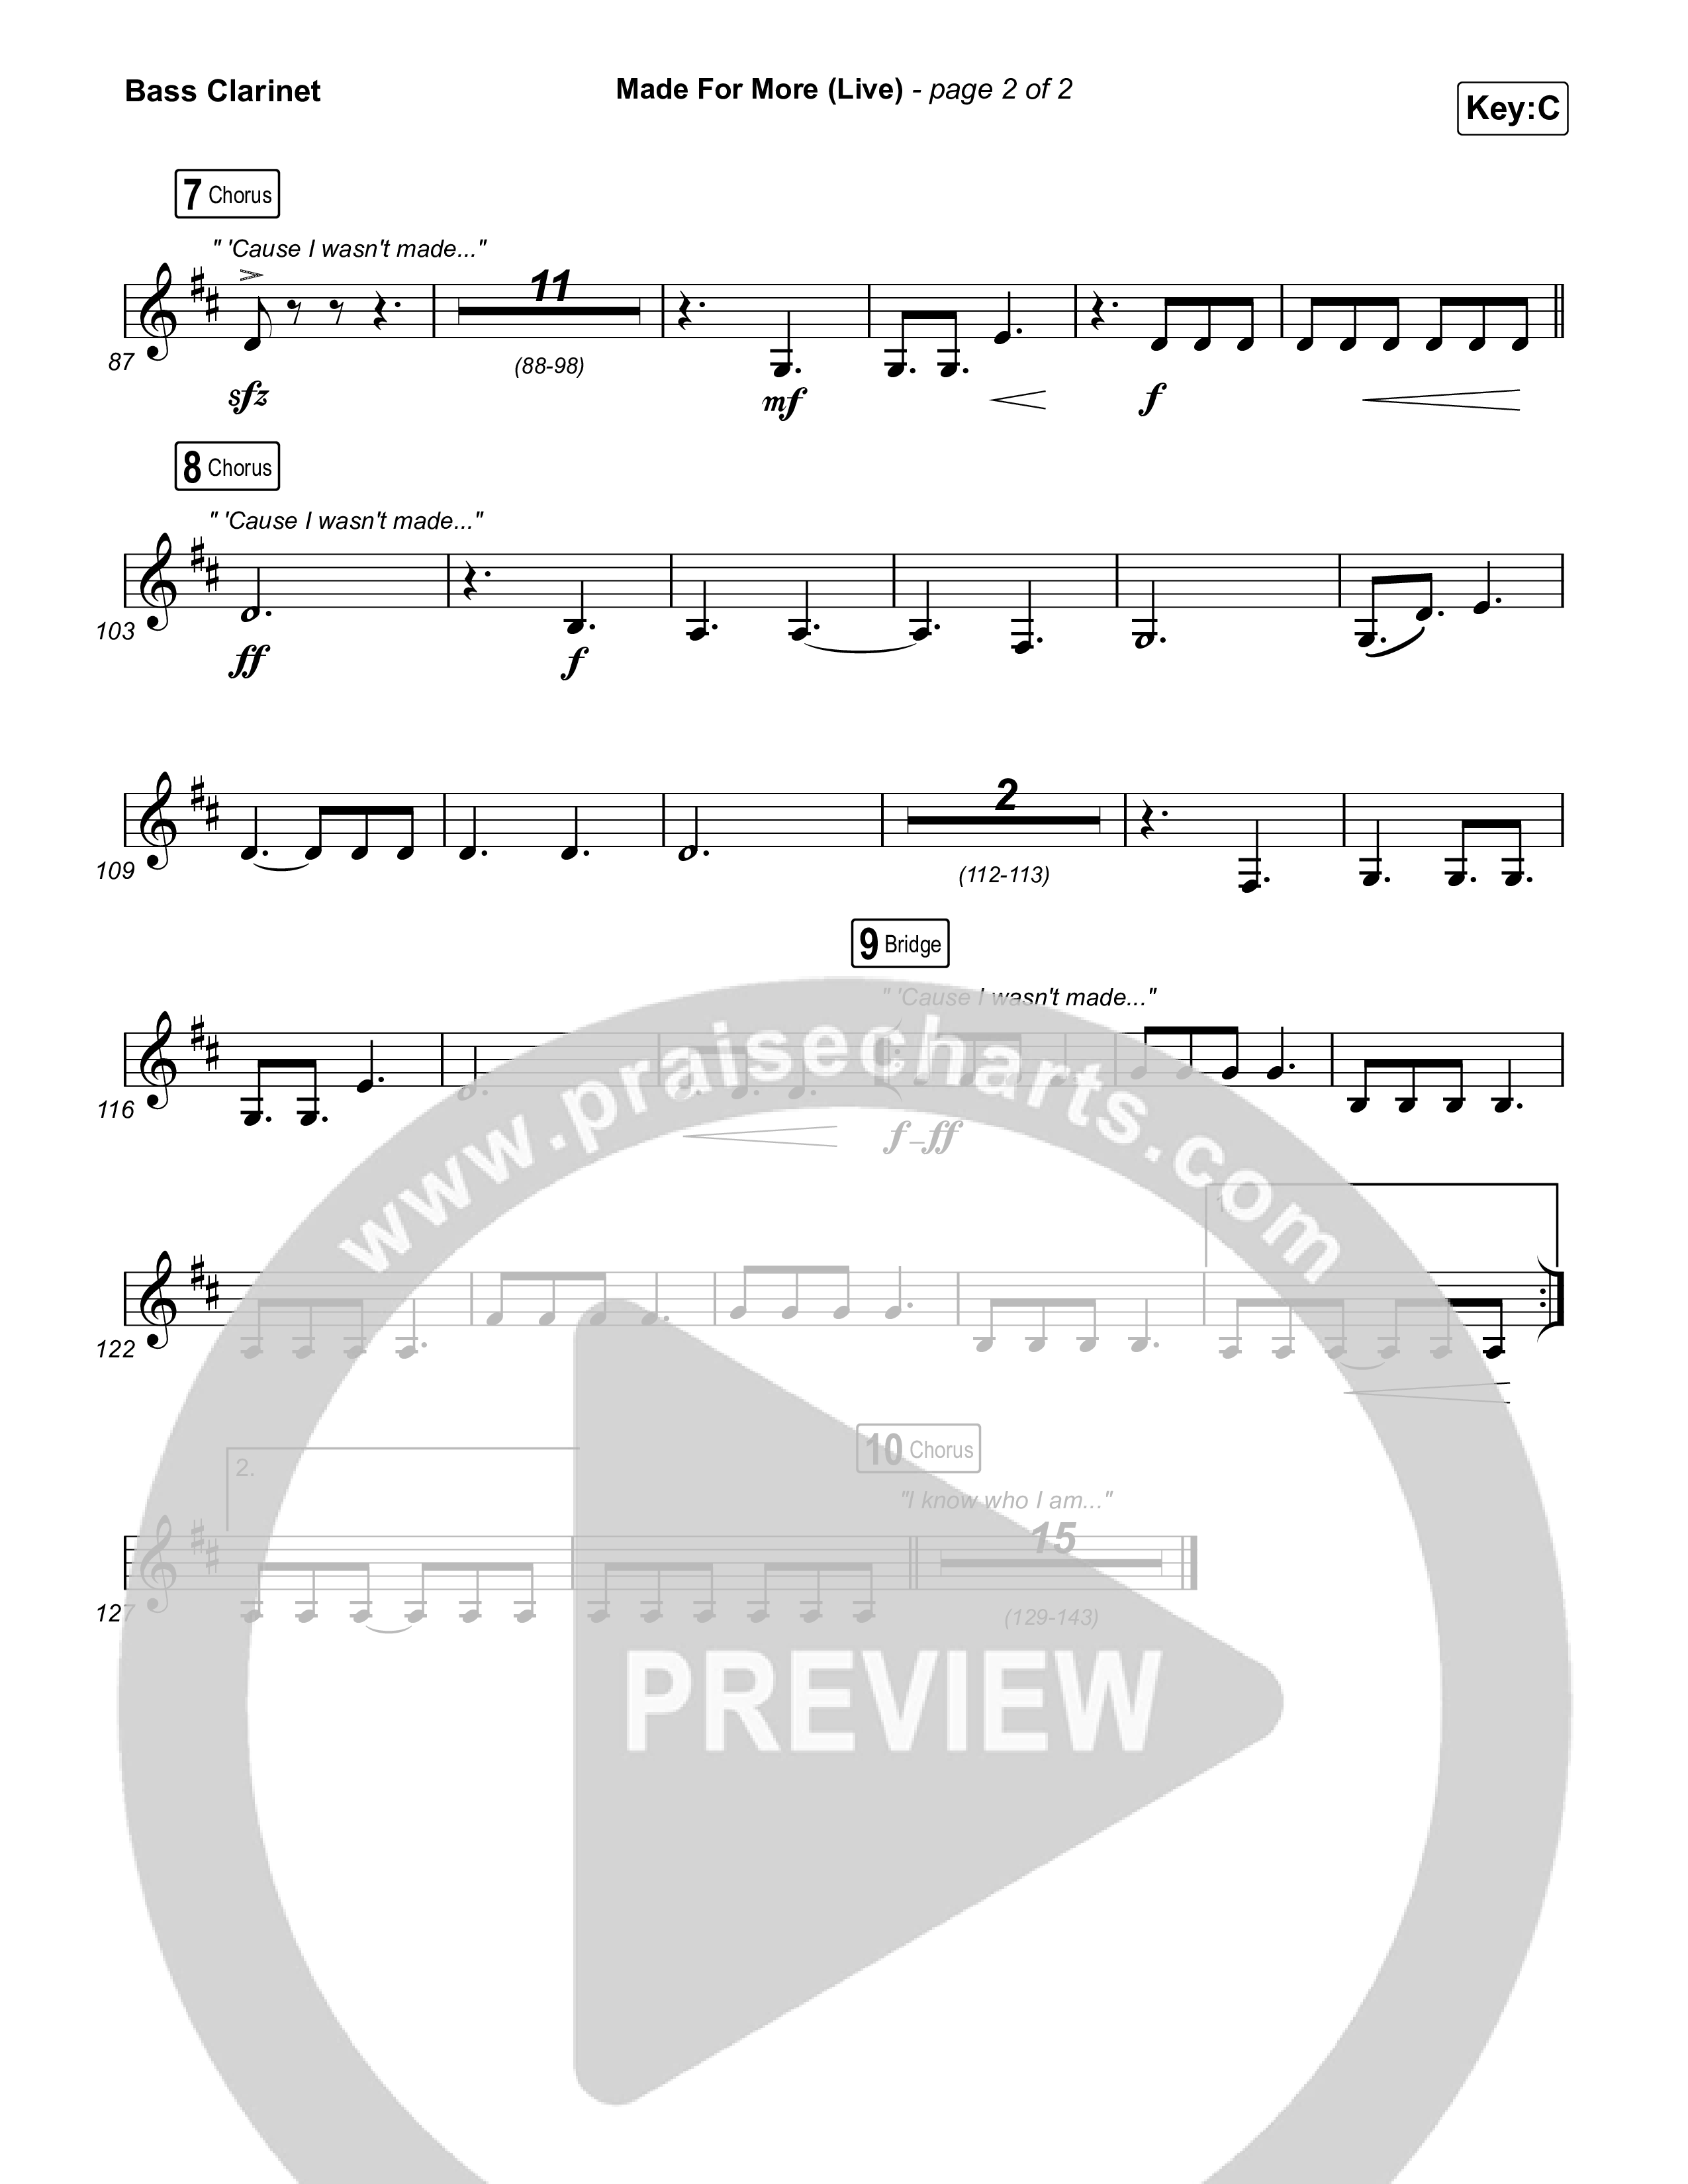 Made For More (Choral Anthem SATB) Bass Clarinet (Josh Baldwin / Jenn Johnson / Arr. Luke Gambill)